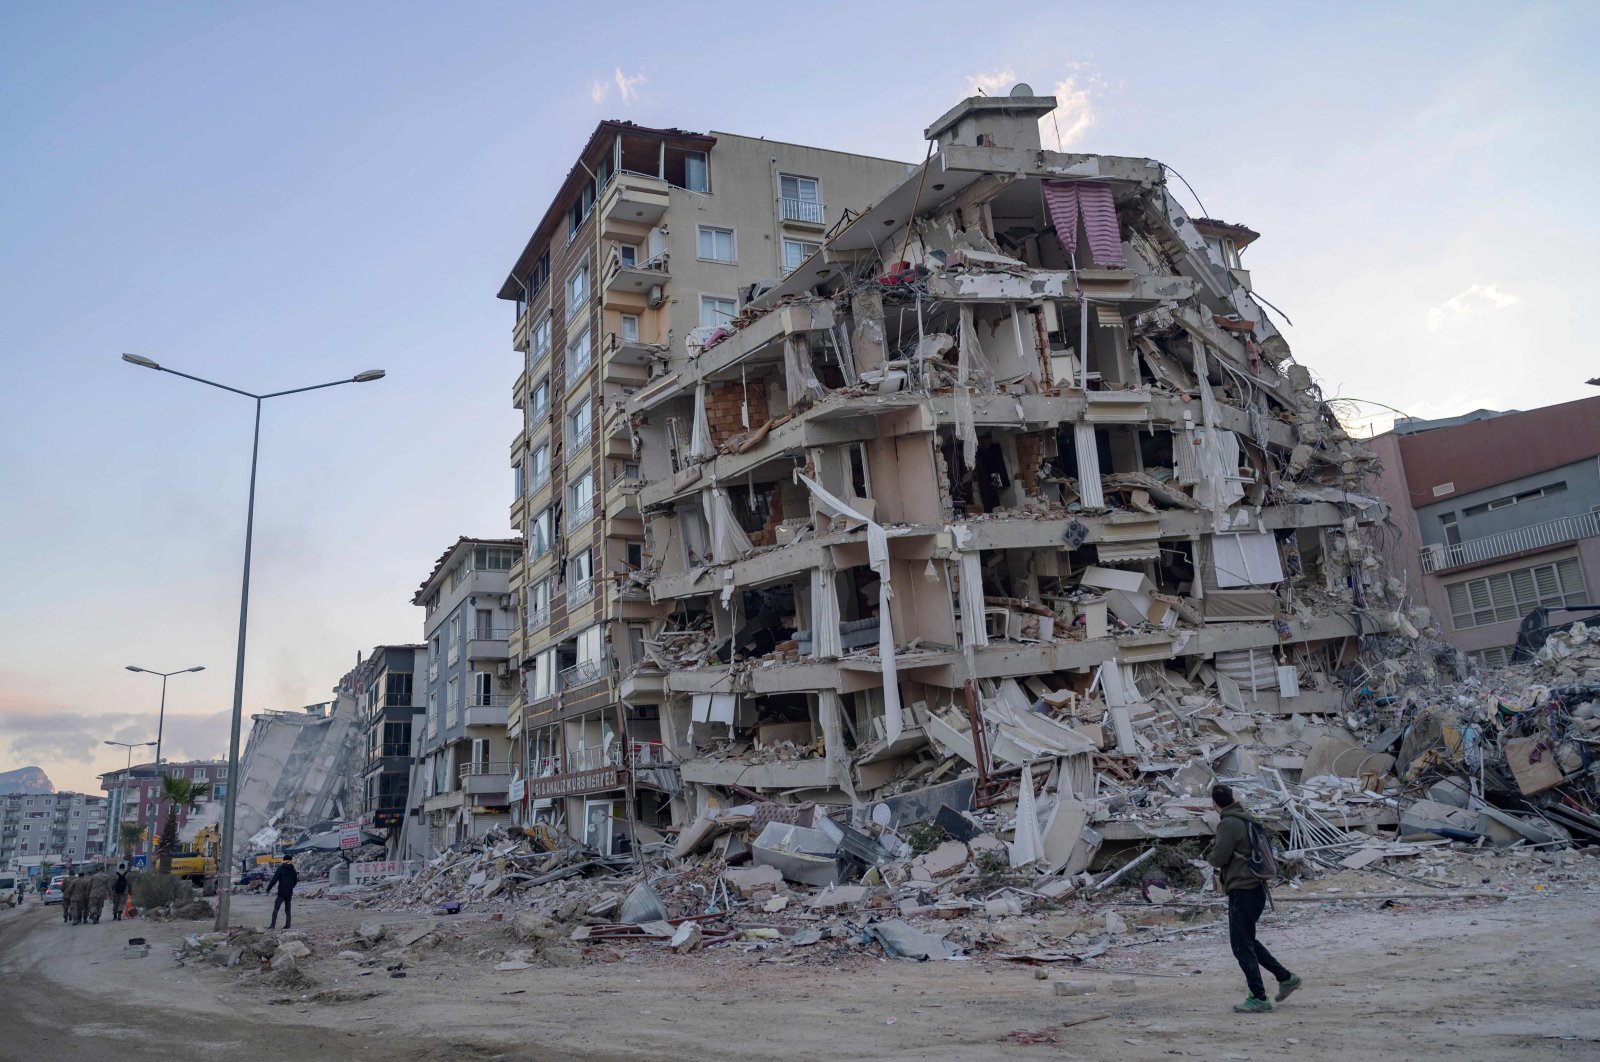 Kematian akibat gempa meningkat menjadi 41.020 di Türkiye selatan